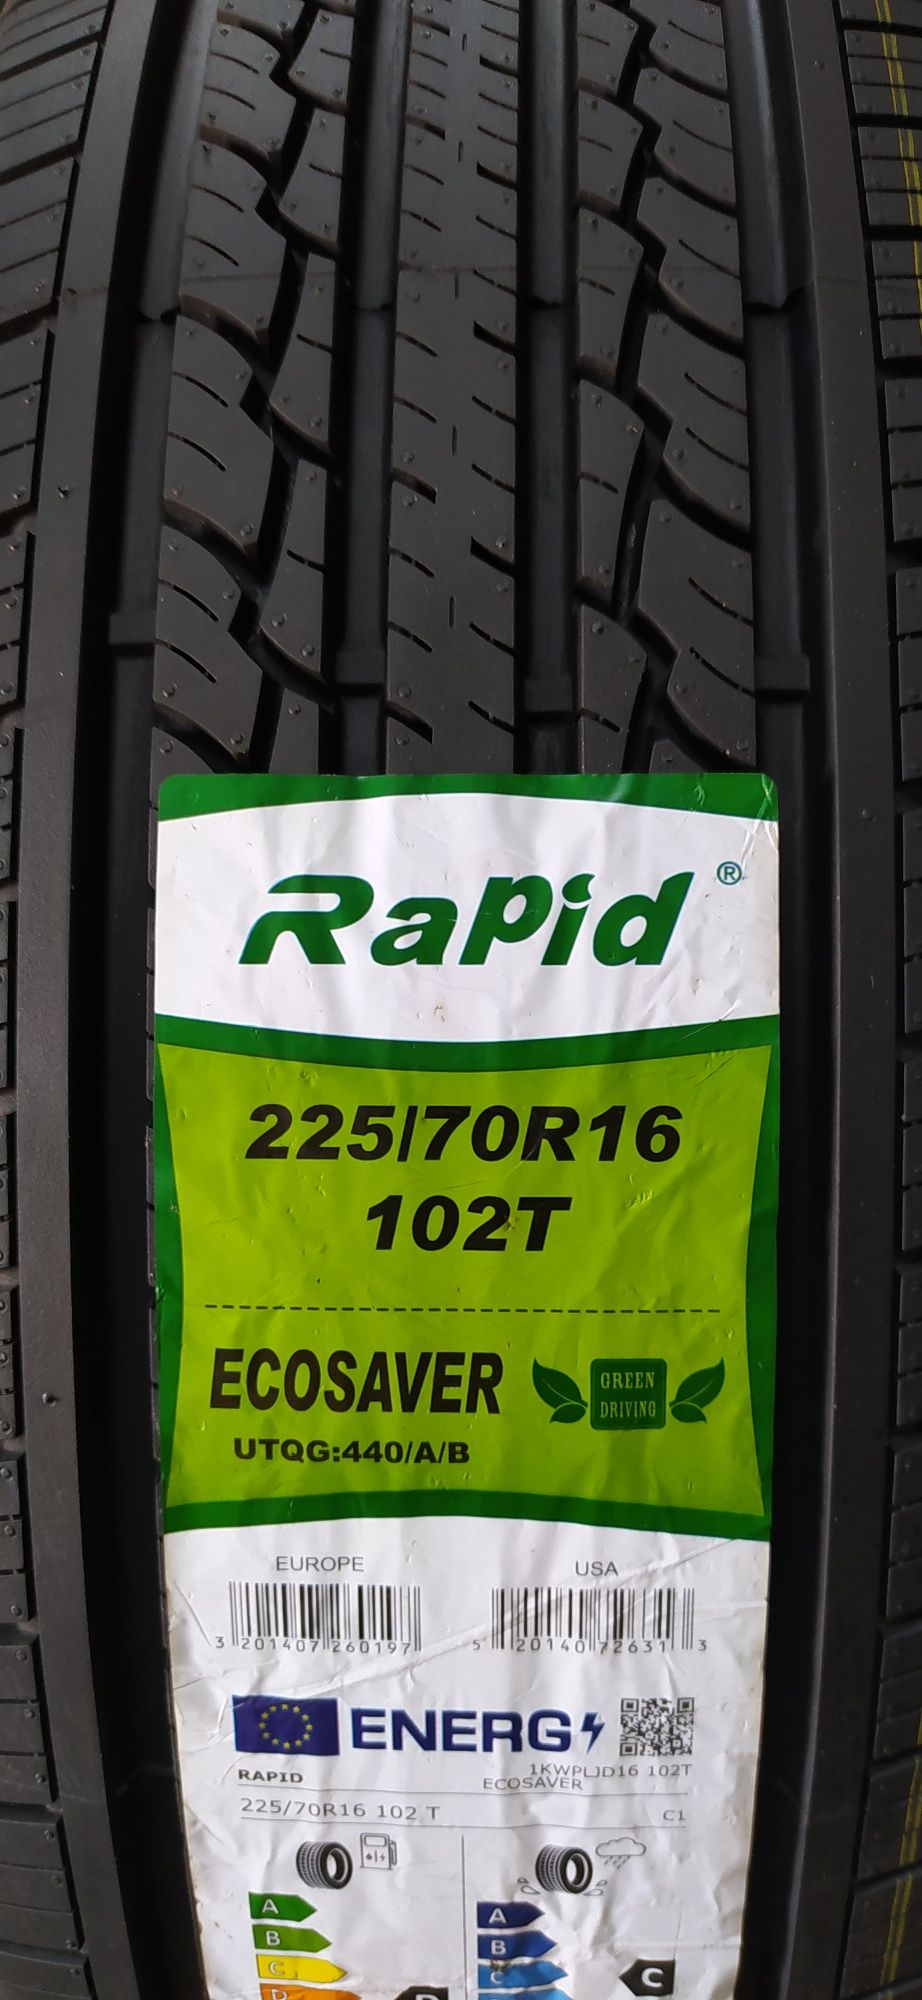 225/70R16. Rapid. Ecosaver